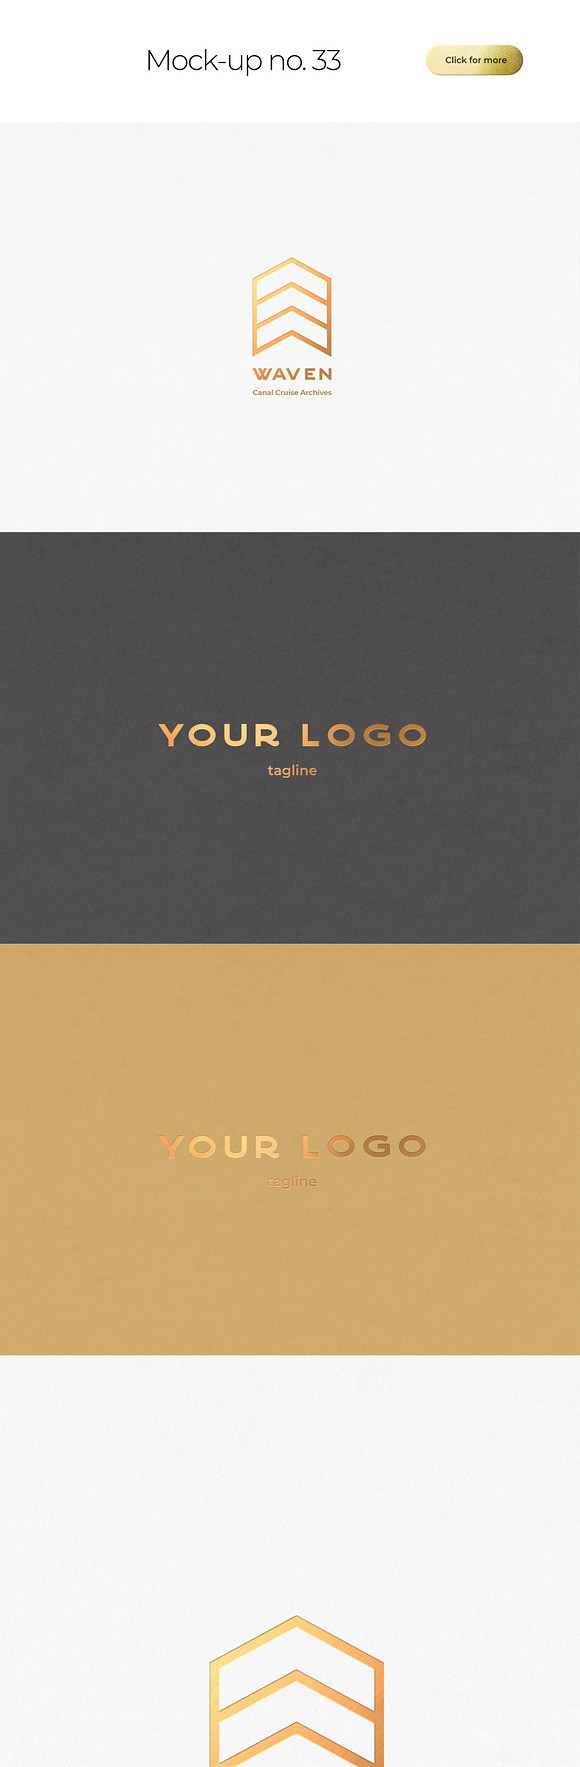 50 logo mockup branding bundle in Branding Mockups - product preview 34